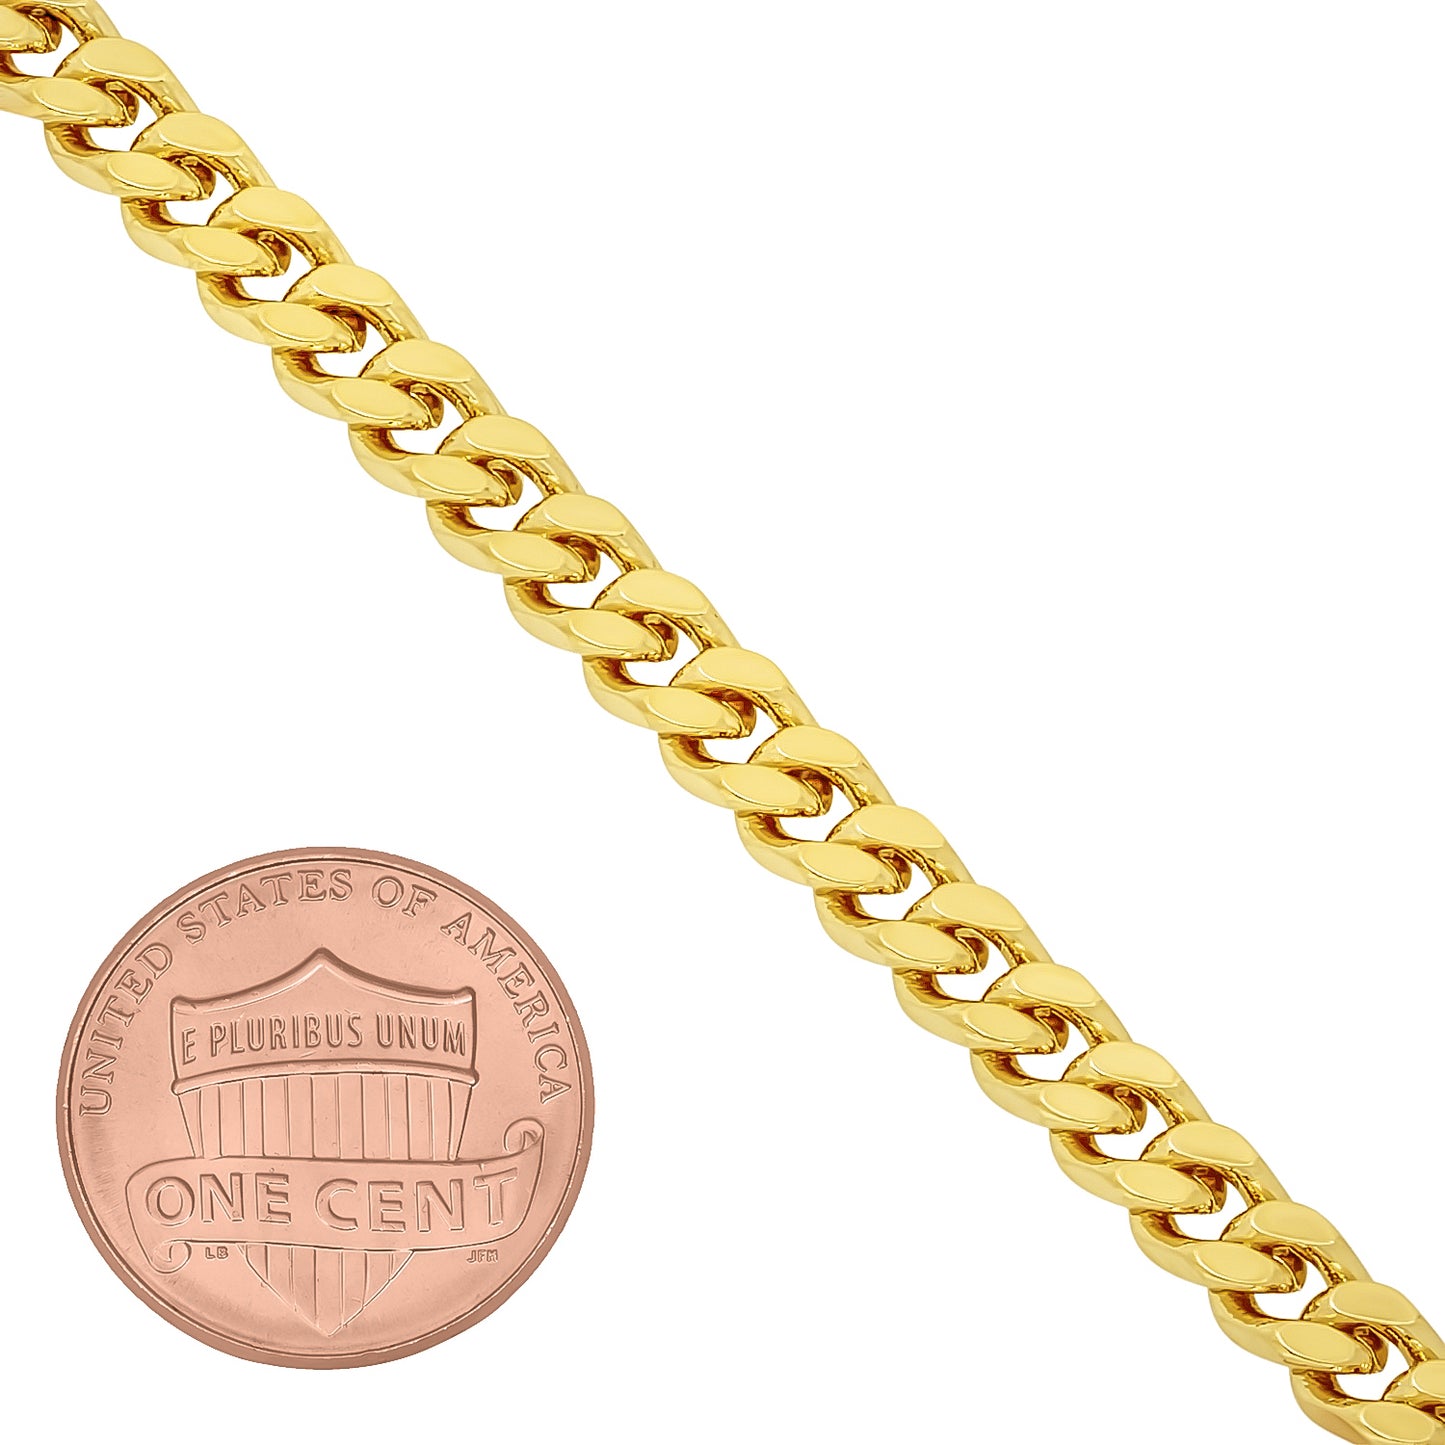 3mm-7mm Polished 14k Yellow Gold Plated Flat Curb Chain Bracelet (SKU: GL-CURB-FLAT-BR)